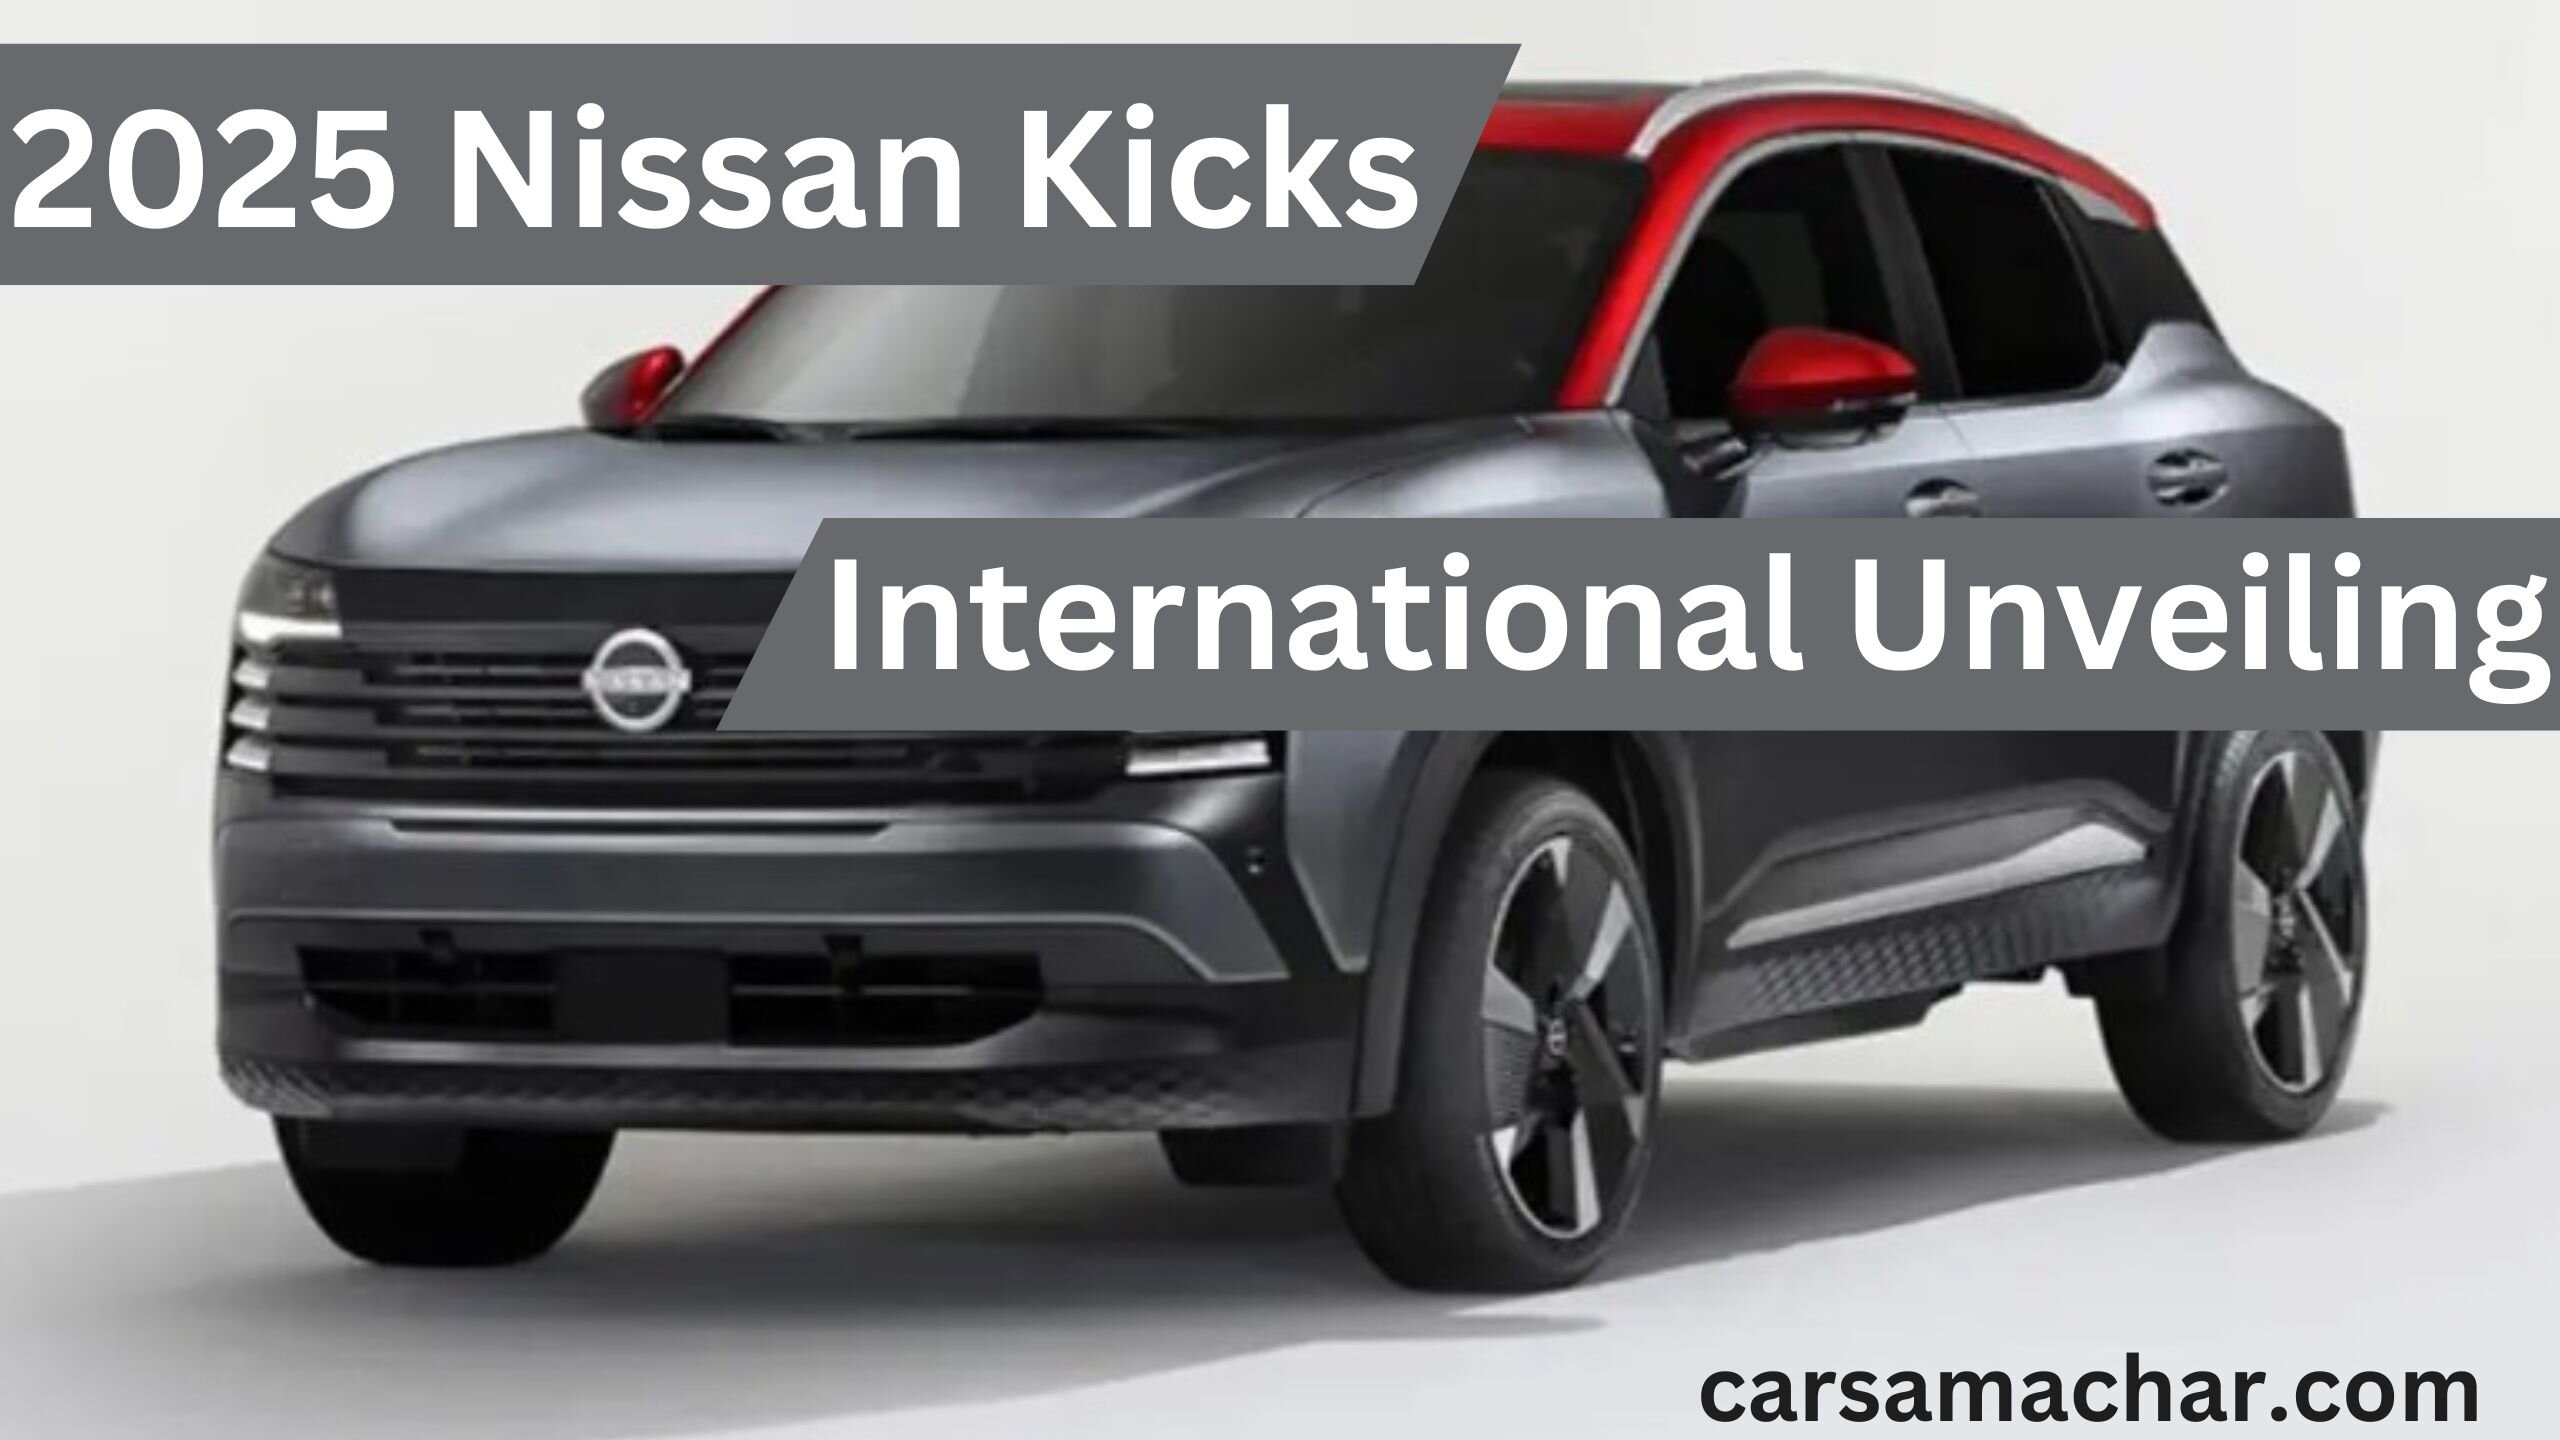 2025 Nissan Kicks International Unveiling : 2025 Nissan Kicks का Super Global Dhamaka! ready to Rule.